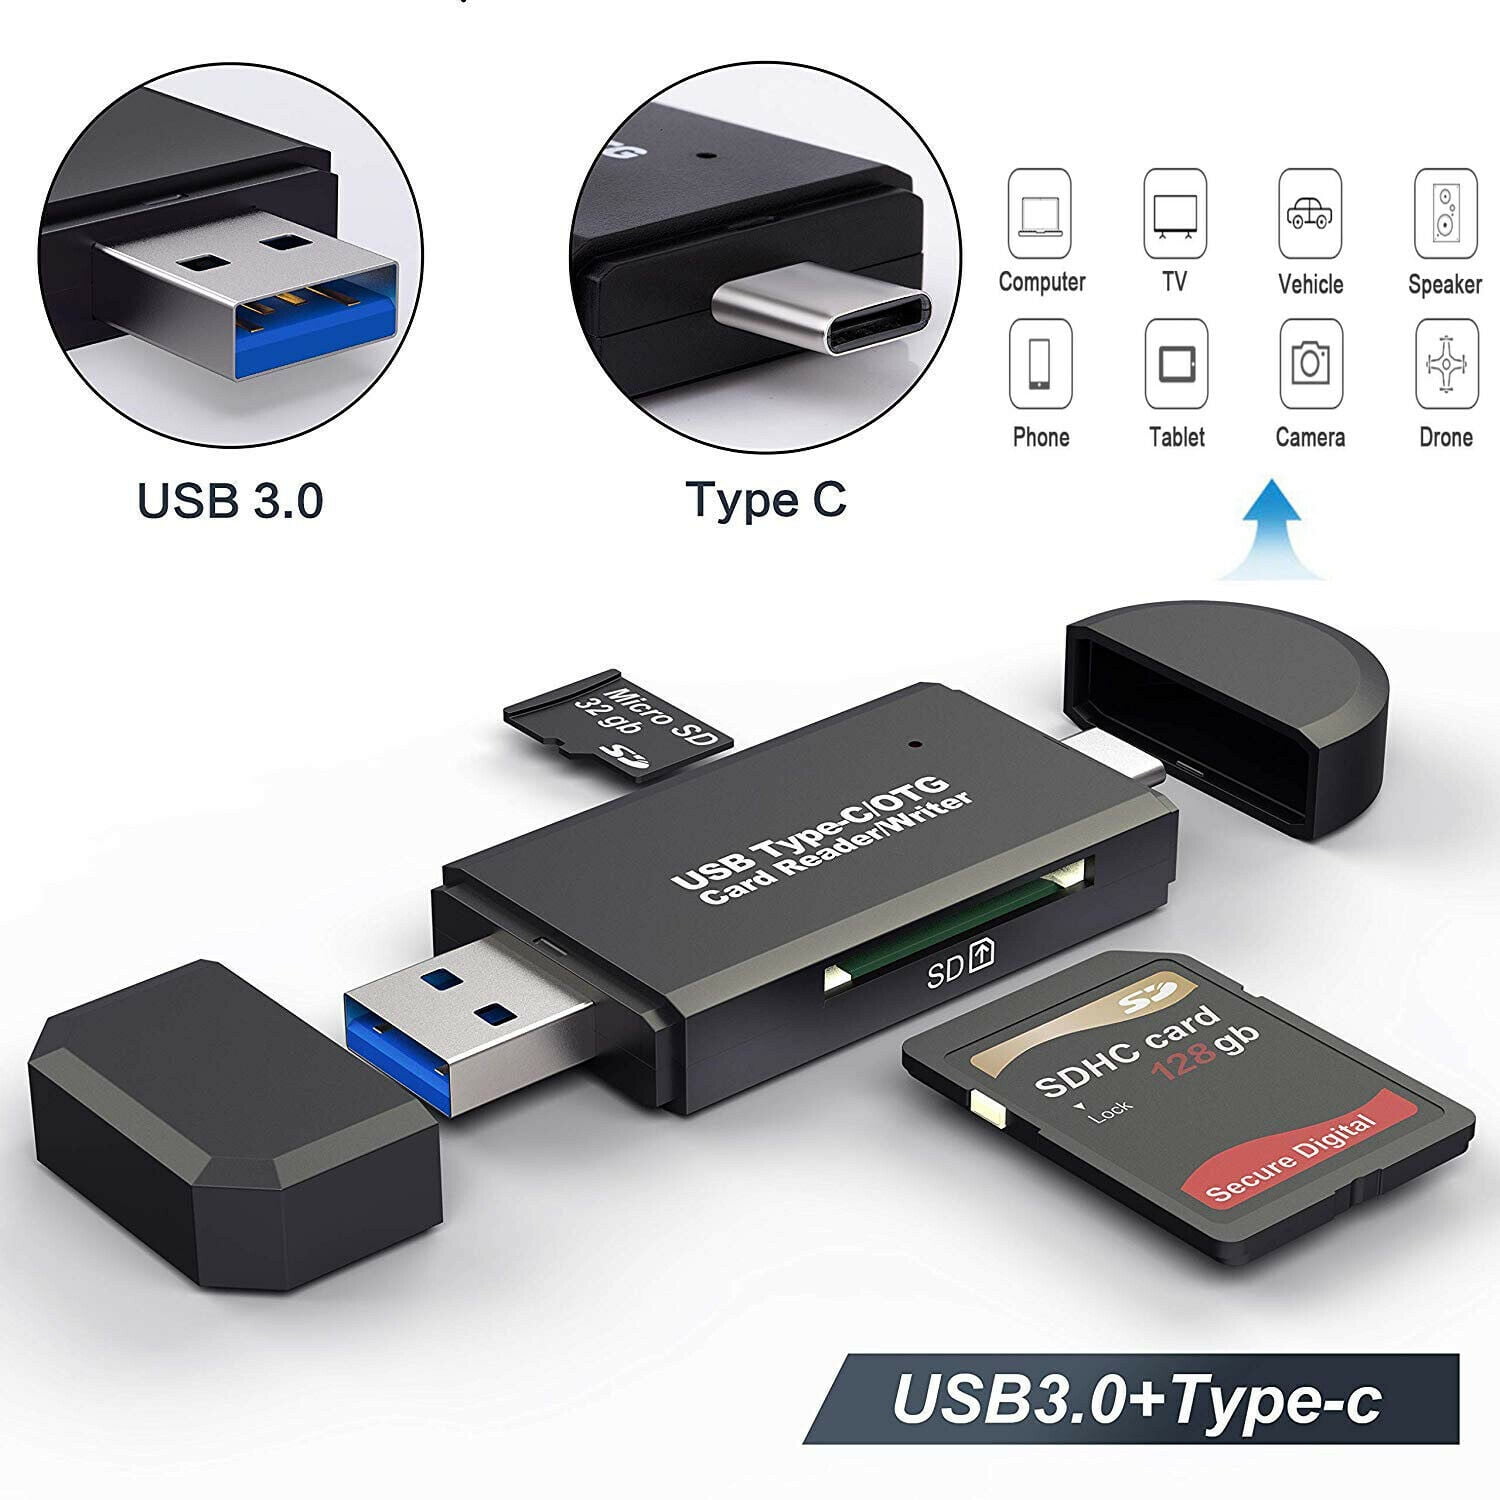 USB SD Card Reader, Reader Memory Card Adapter for SDXC, SDHC, RS-MMC - Walmart.com